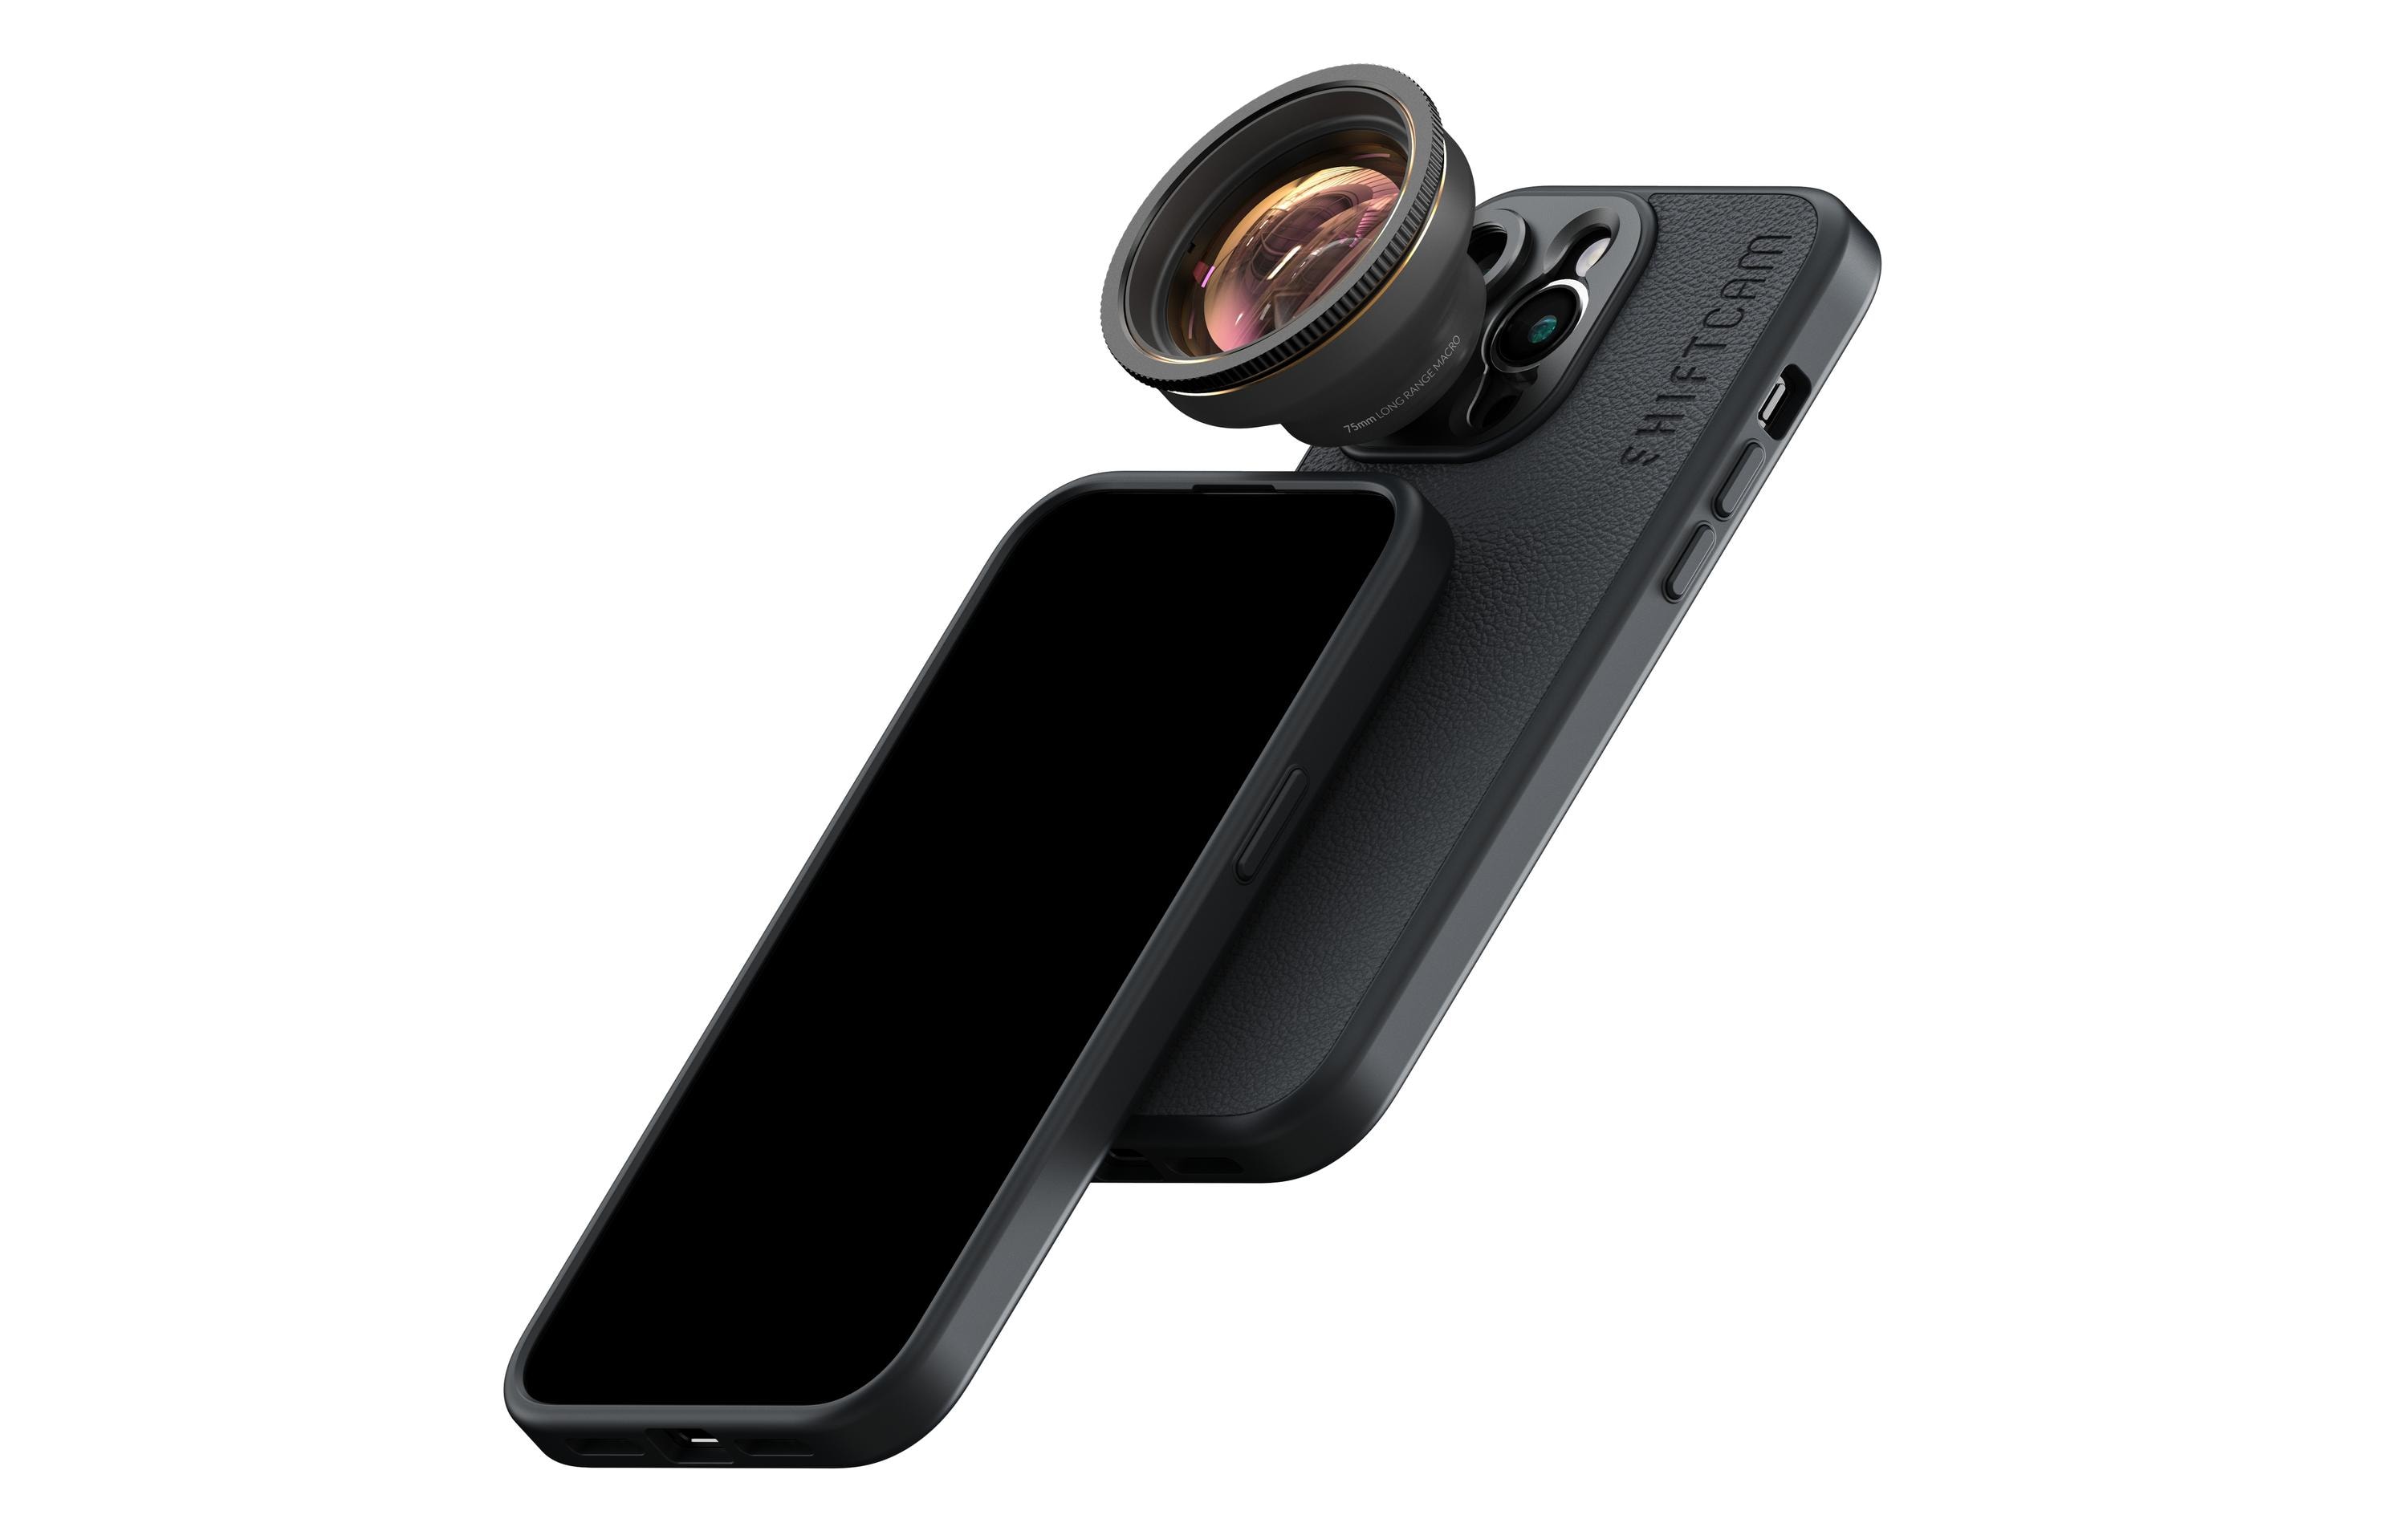 Shiftcam Smartphone-Objektiv LensUltra 75mm Long Range Macro